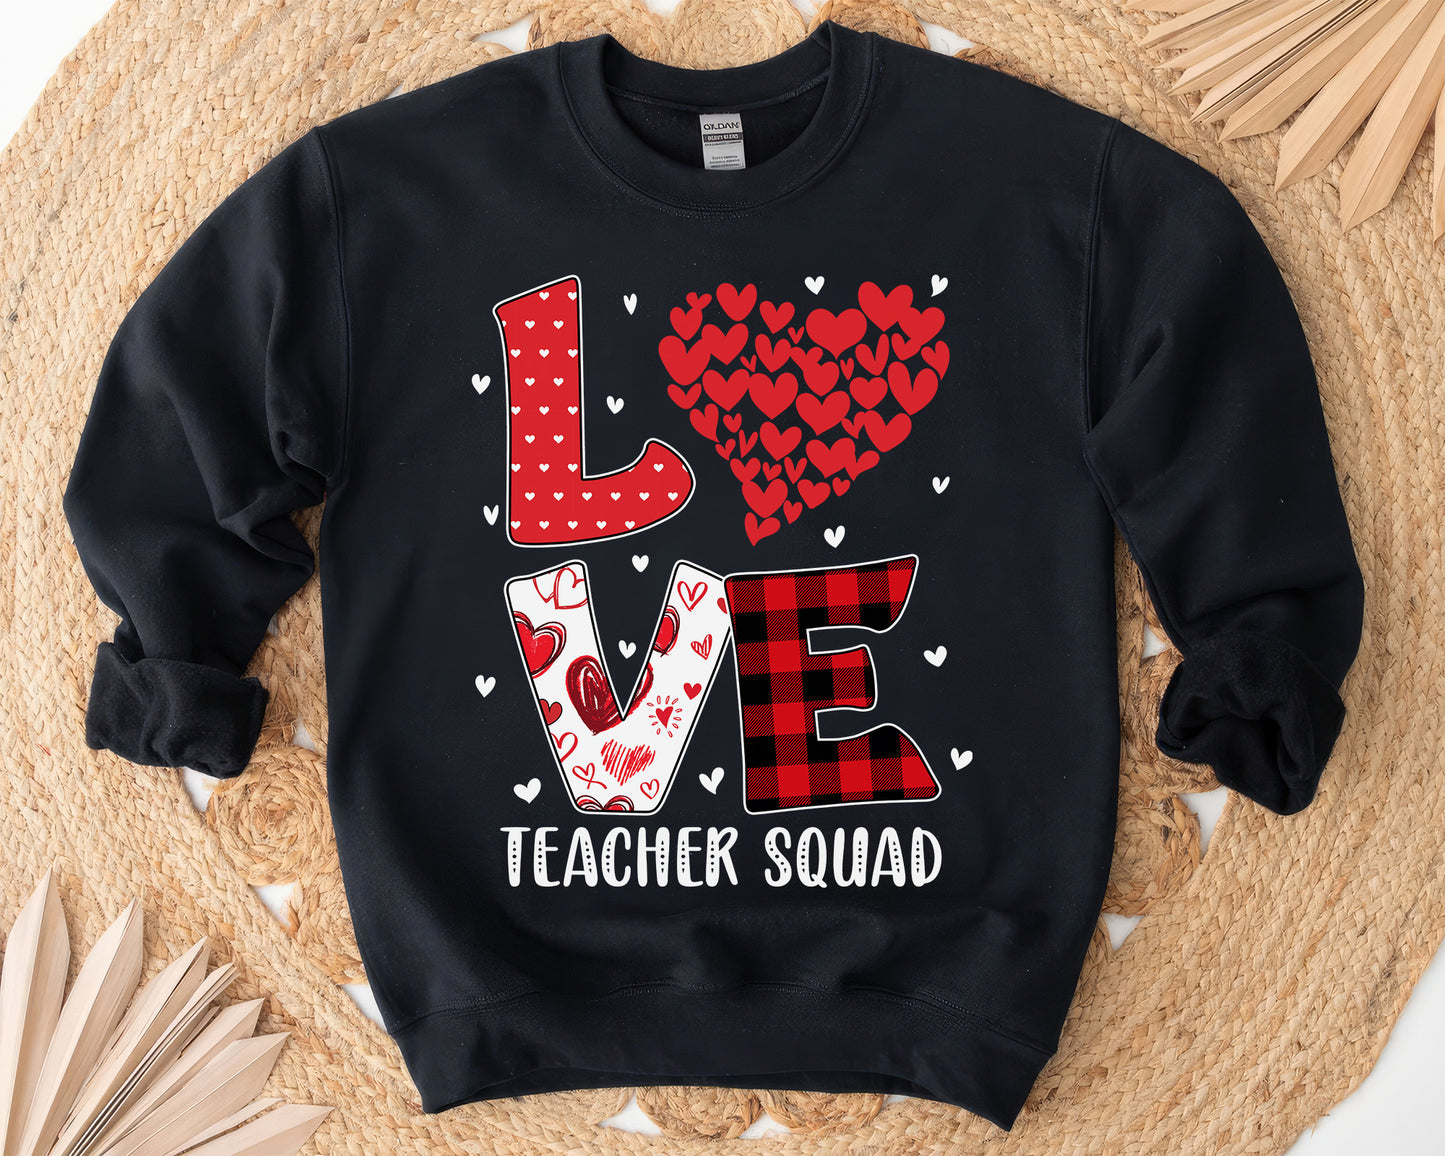 Tee Art Online - Valentine Red Hearts Within Heart LOVE Teacher Personalized Sweatshirt | Valentine's Day Kawaii Cute Gifts | Buffalo Plaid Pattern Design - Black